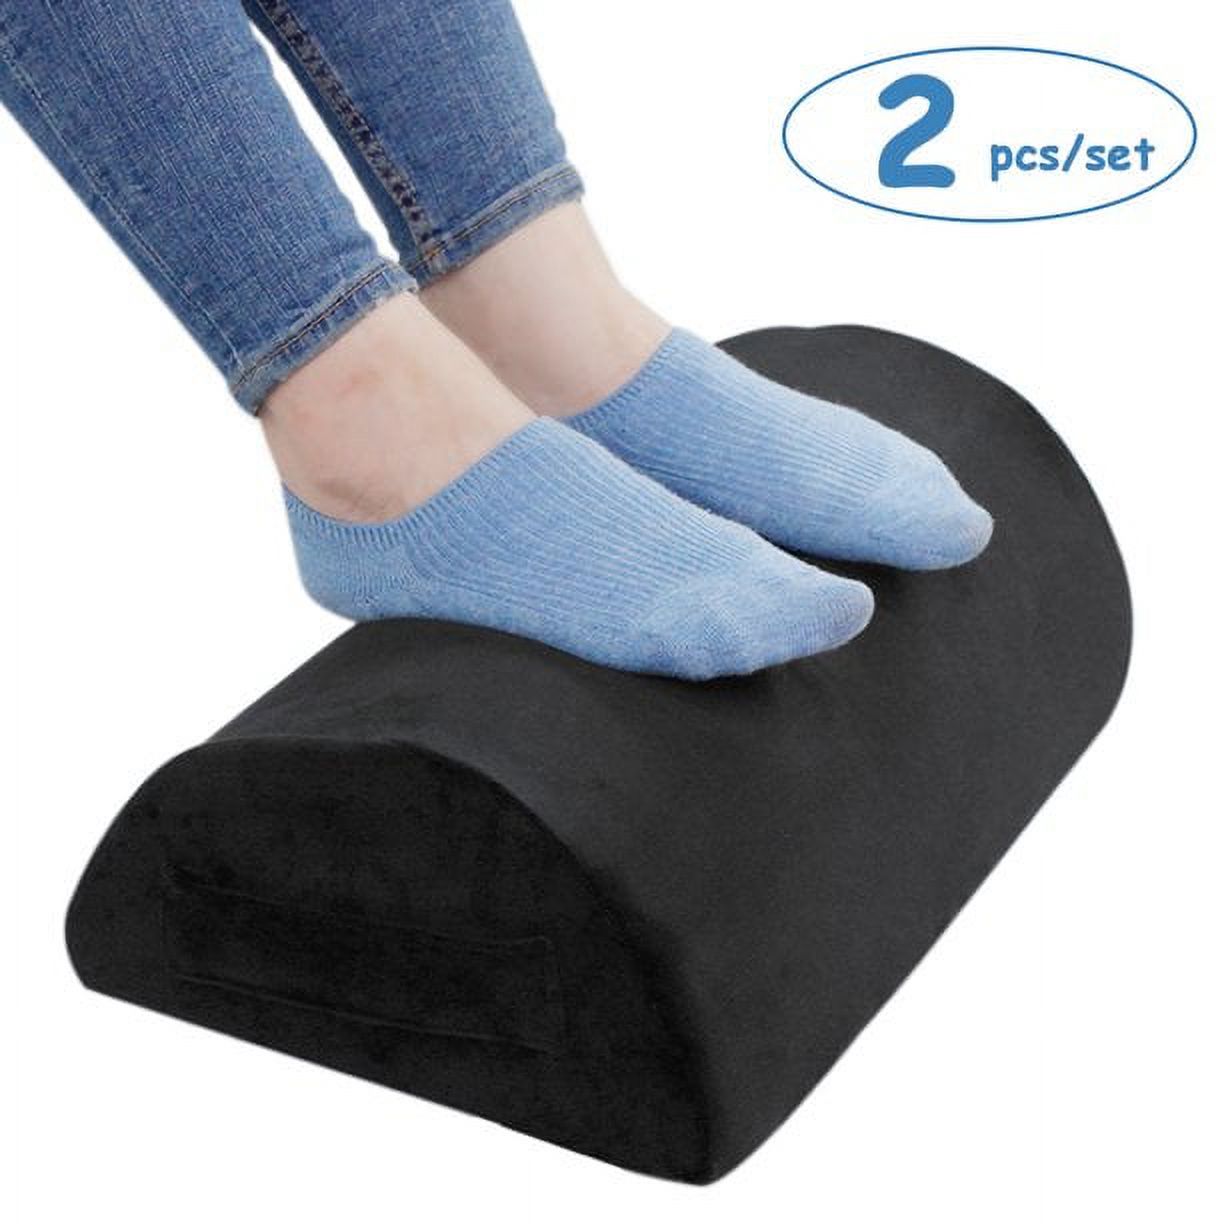 Ergonomic Foot Rest Cushion Under Desk with High Rebound Ergonomic Foam Non-Slip Half-Cylinder Footstool Footrest Ottoman for Home Office Desk Airplane Travel (Black, 2 PCS) - image 1 of 8